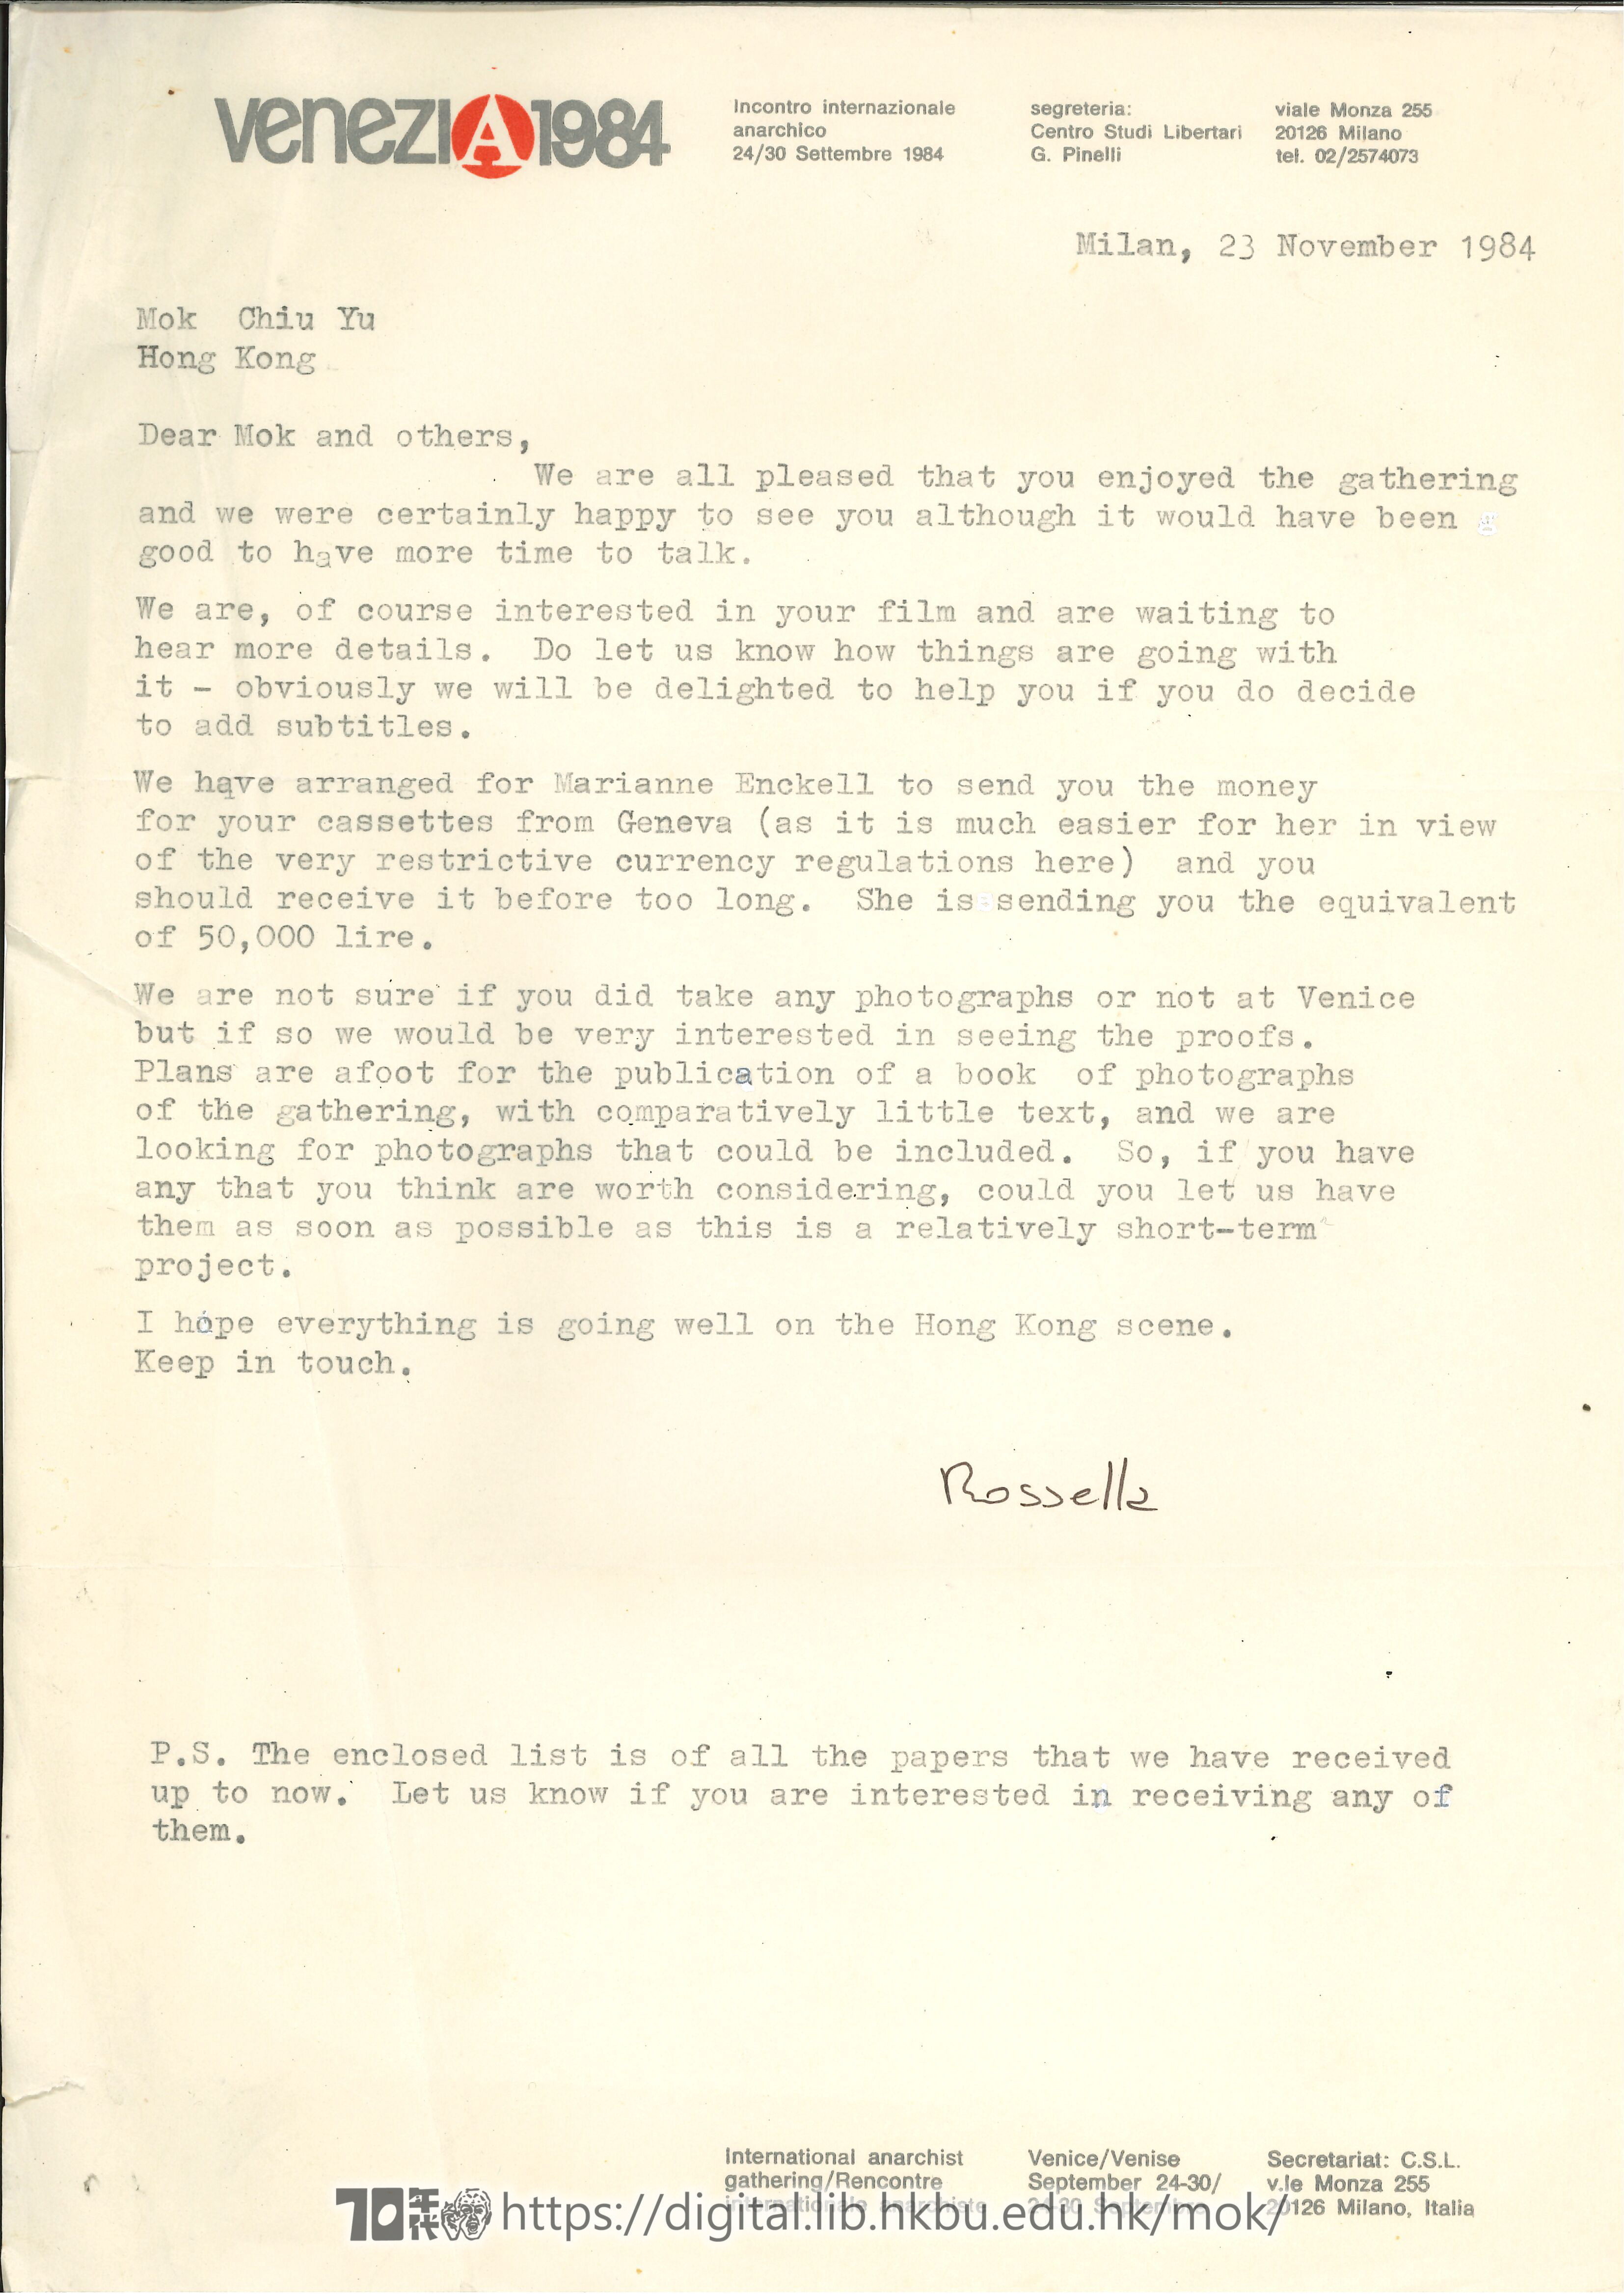   Letter from Rossella  (Milan,  VENEZIA1984) to Mok Chiu Yu  